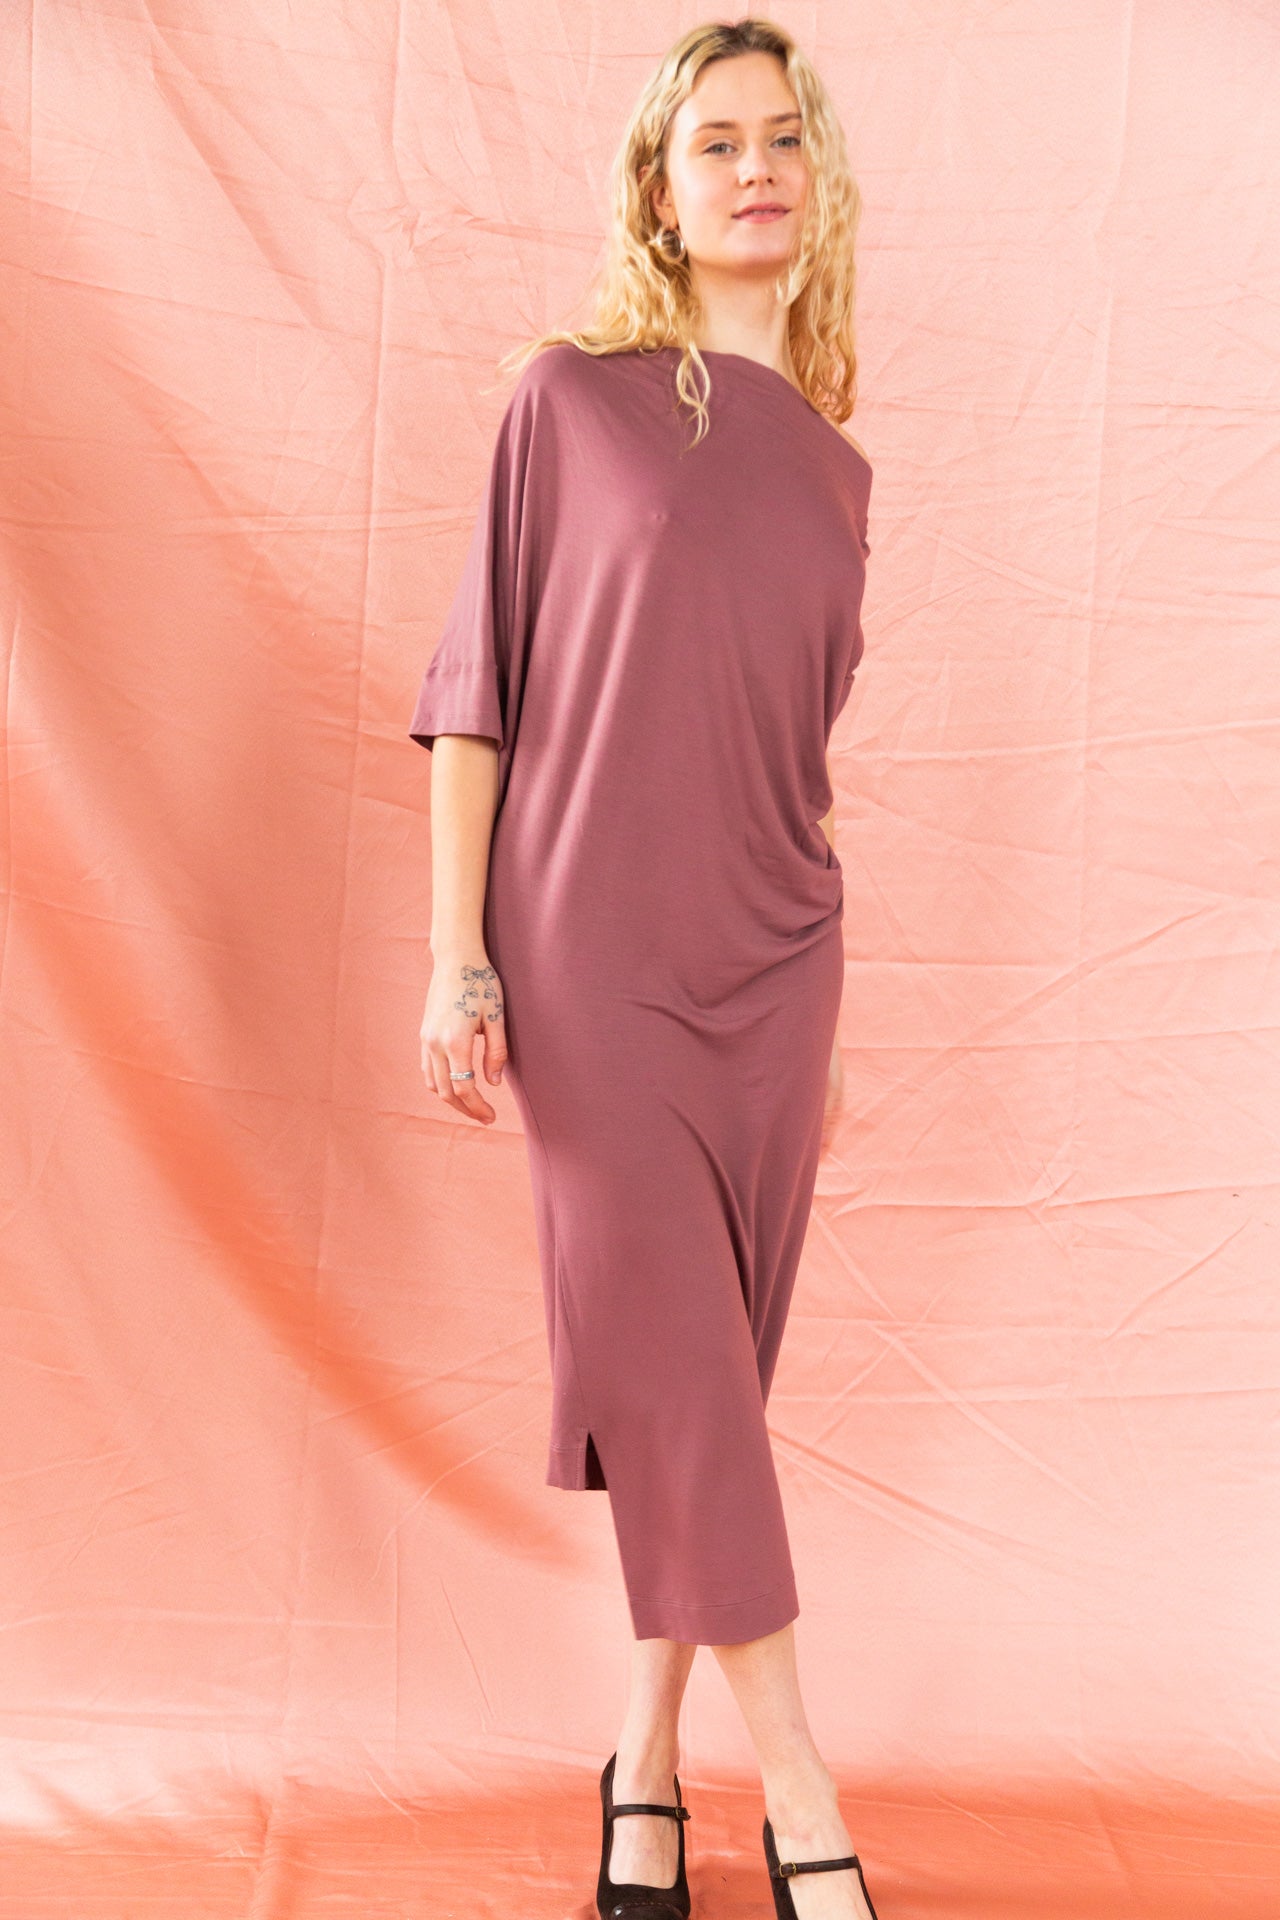 Vivienne Westwood Dress